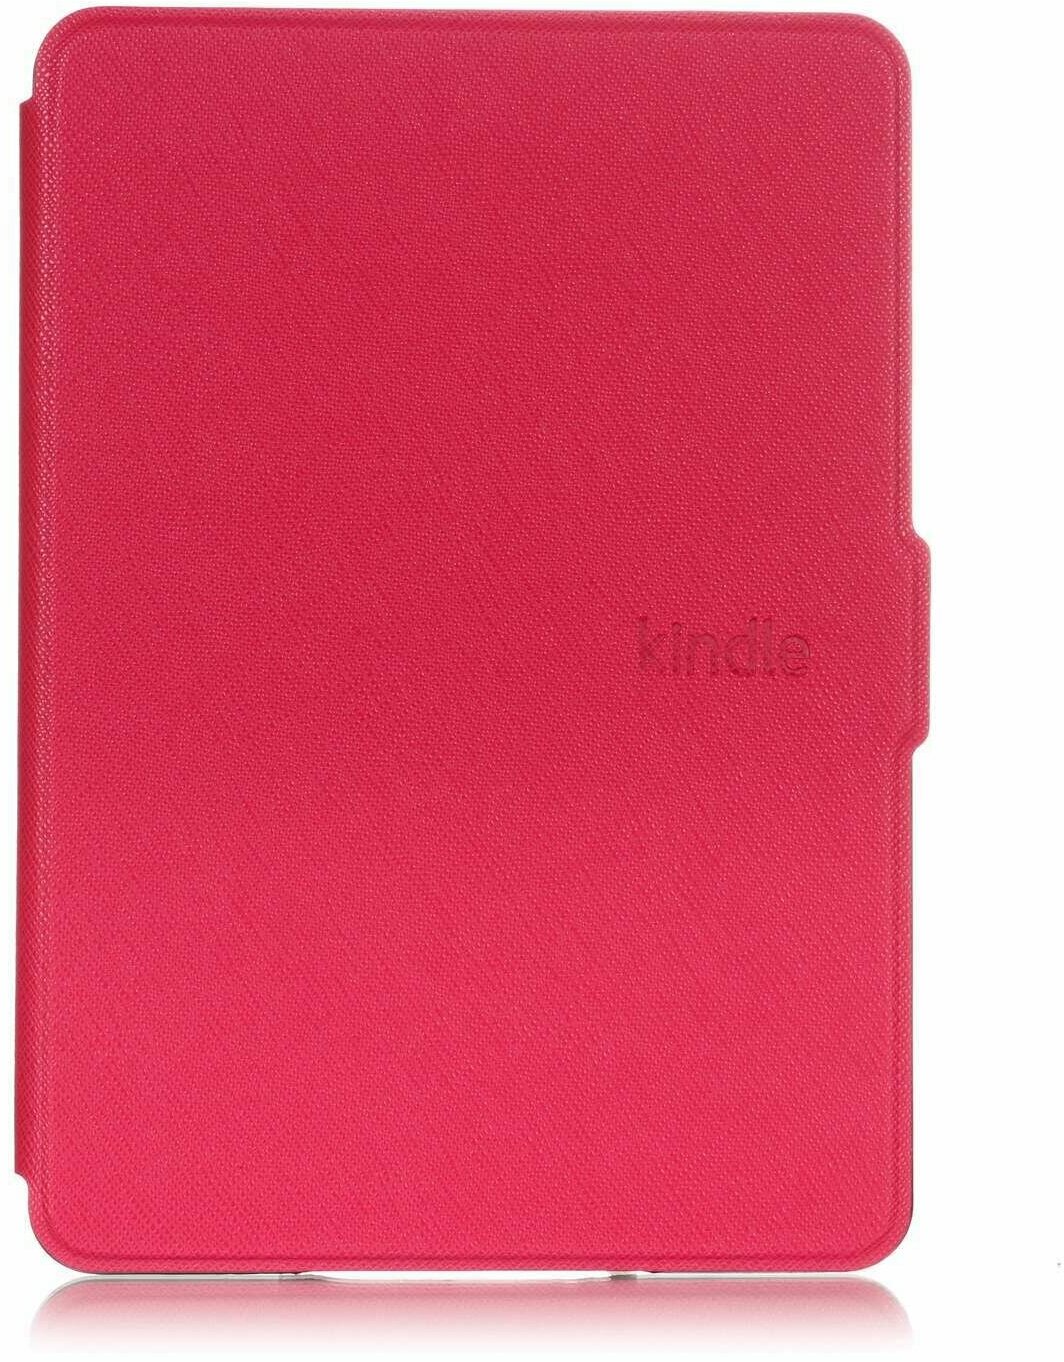 Чехол-обложка для Amazon Kindle PaperWhite 1 / 2 / 3 (2012/2013/2015) rose red